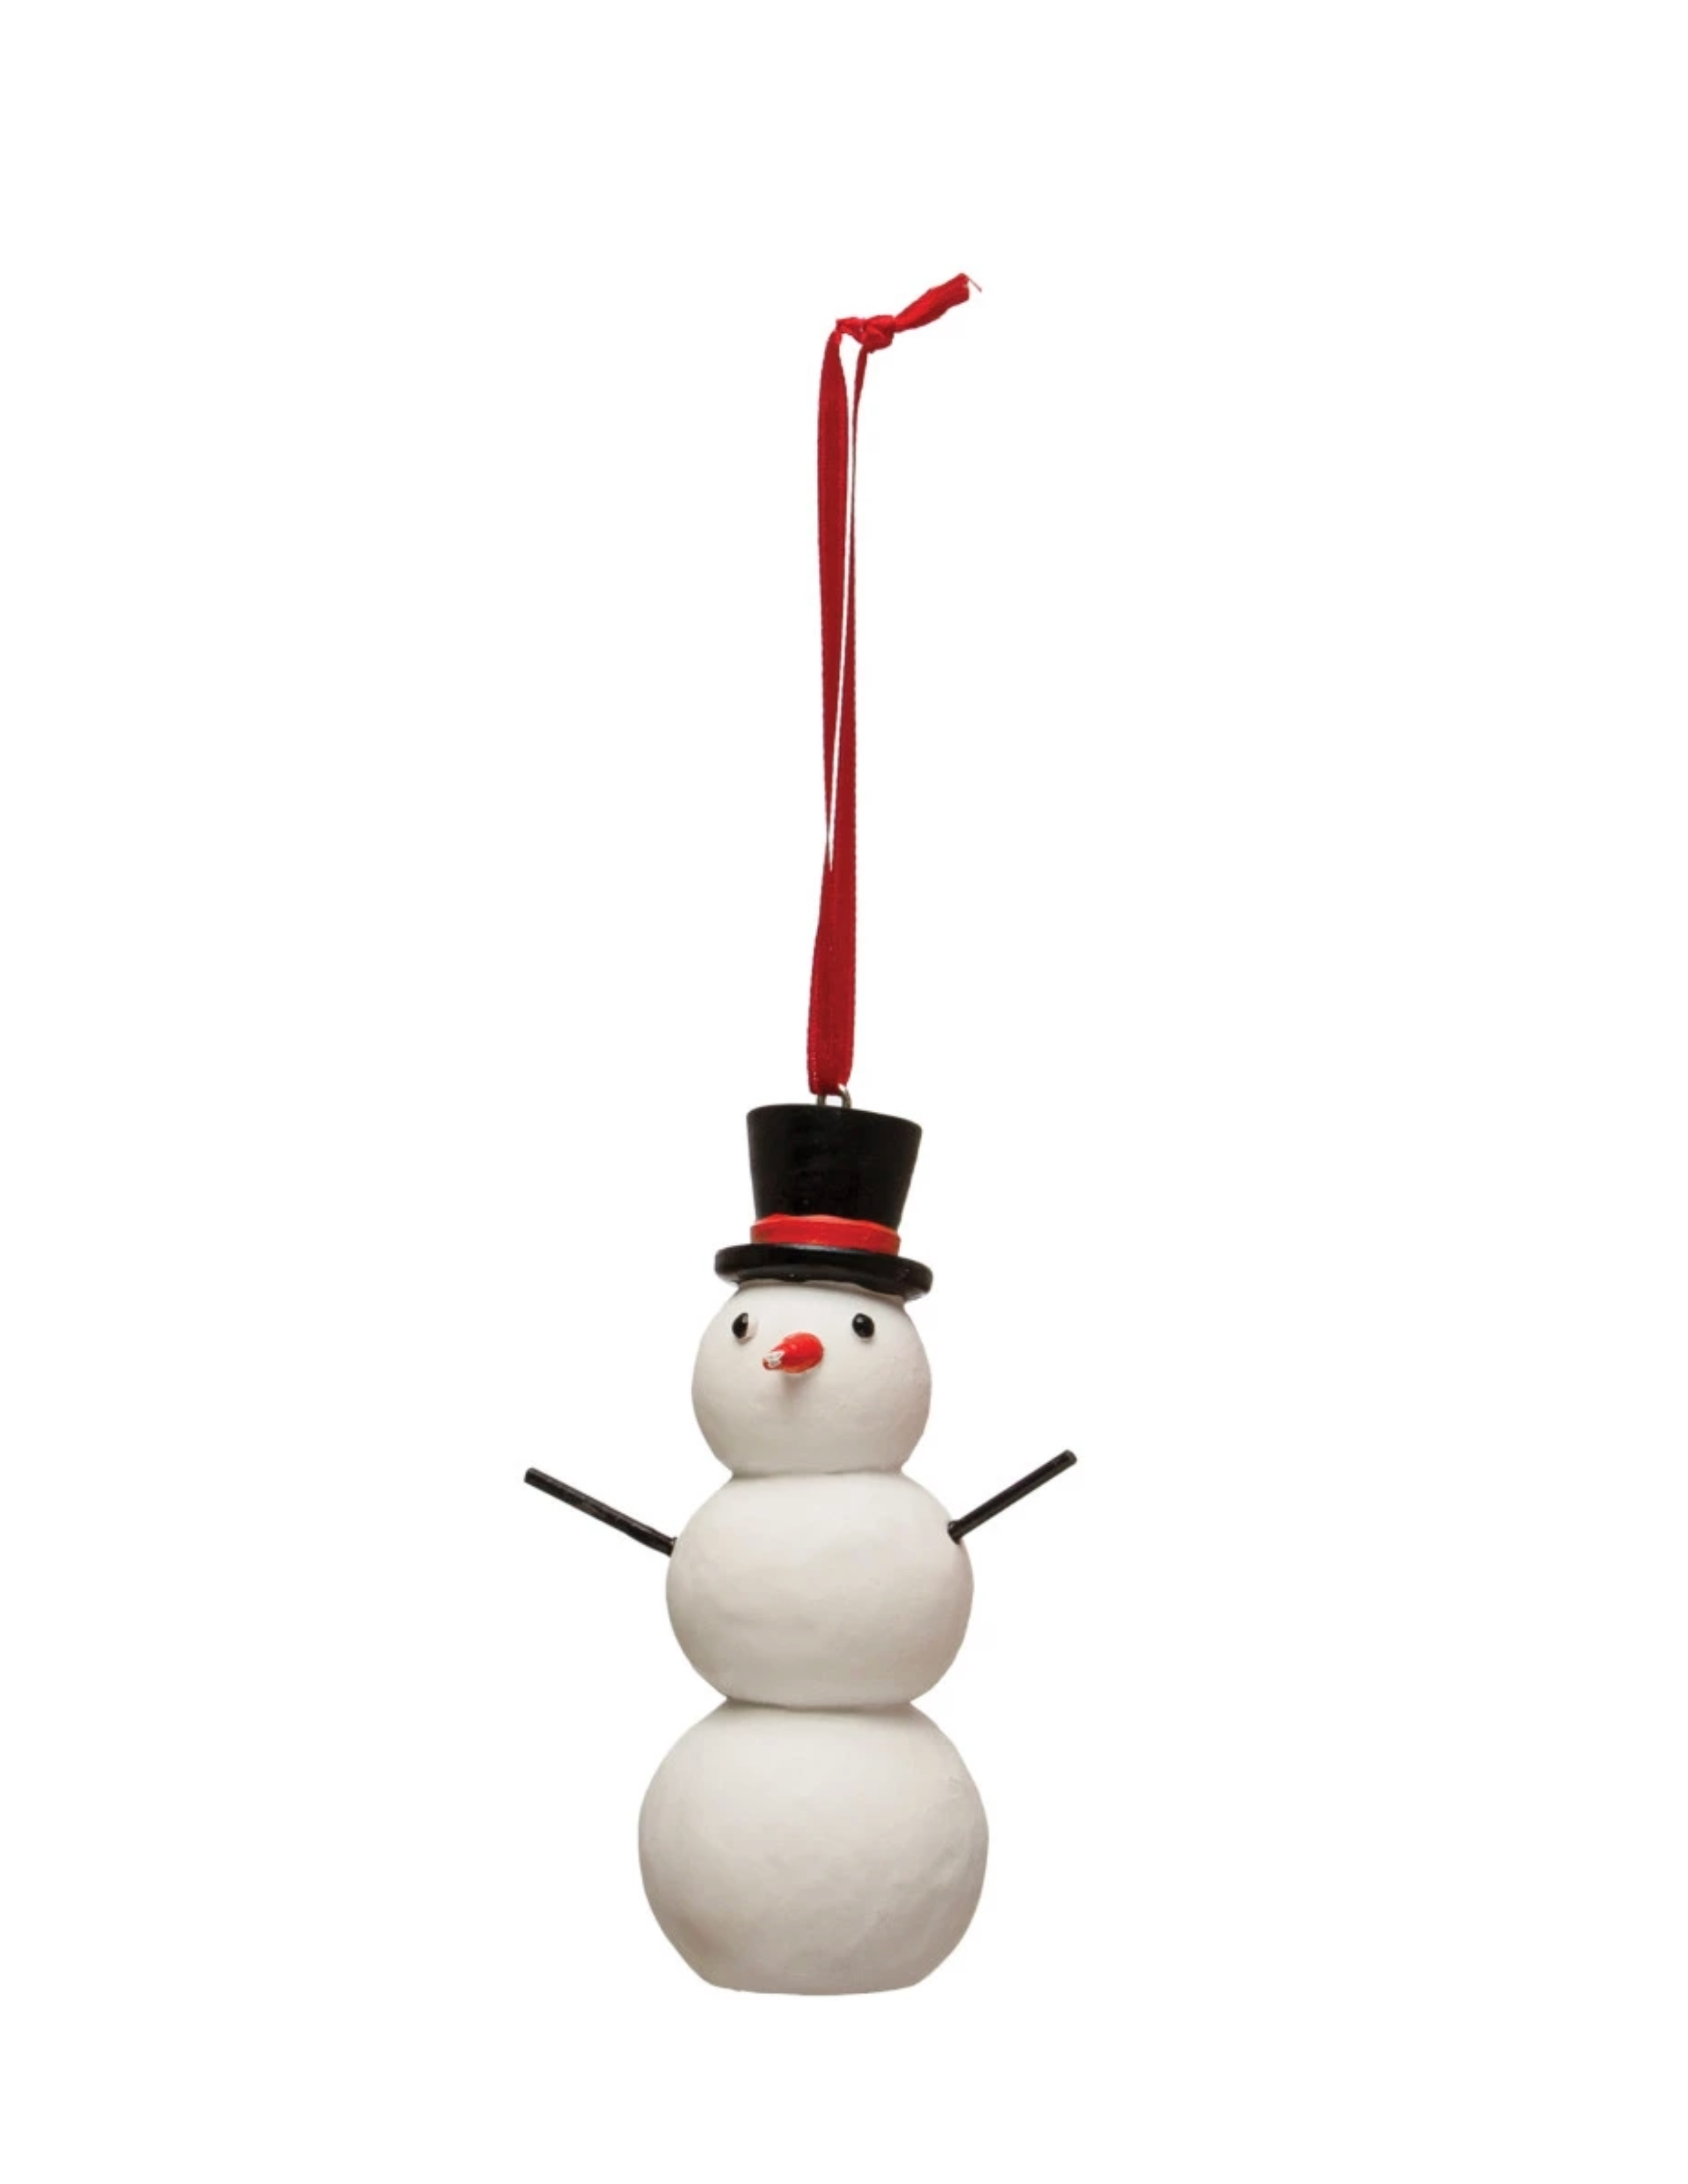 Snowman Ornament